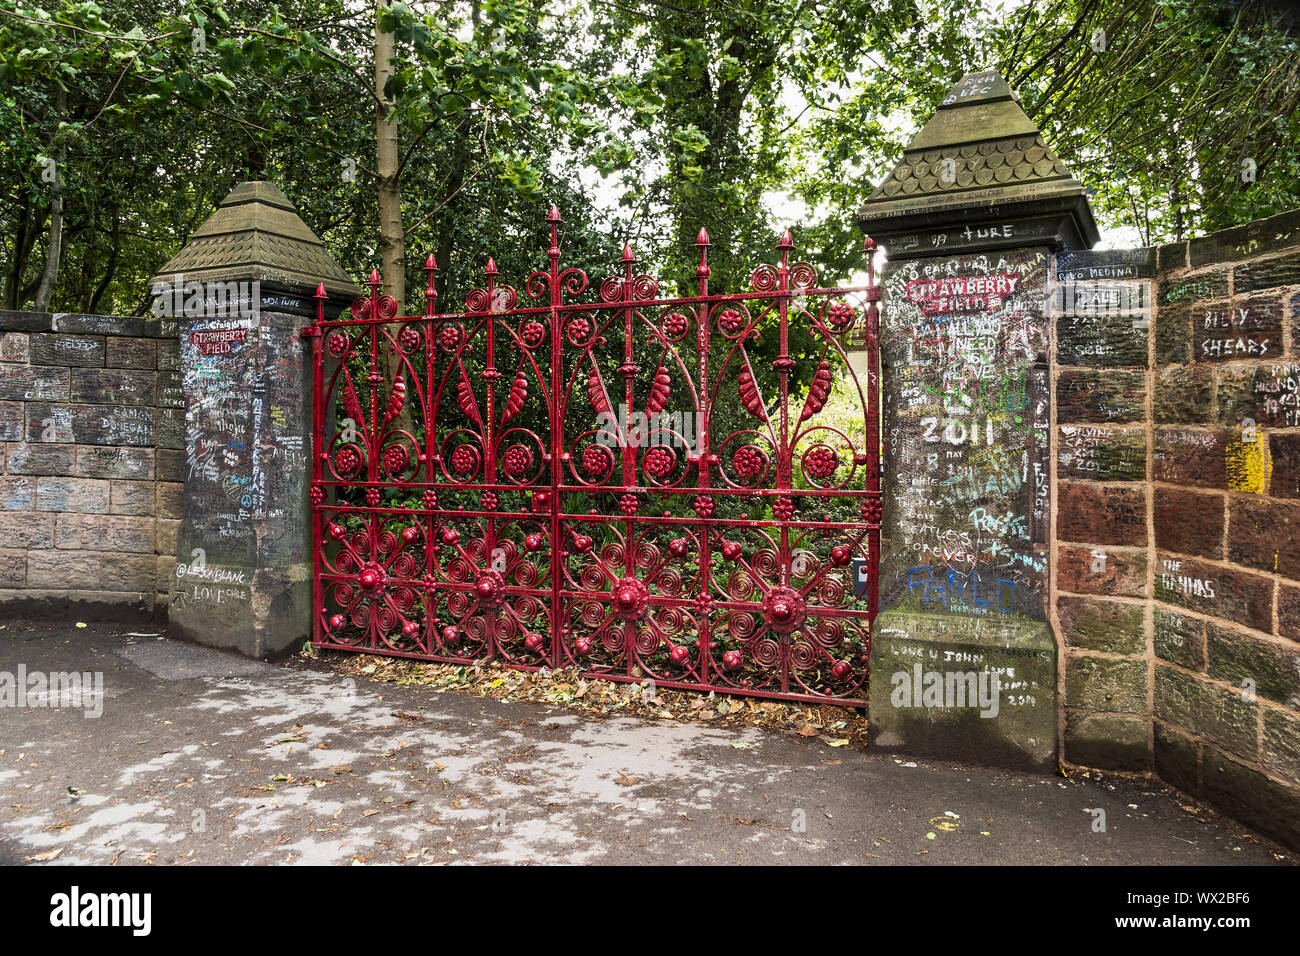 Strawberry Fields gates a Liverpool, UK. Strawberry Fields casa dei bambini motivi sono immortalati nei Beatles pop canzone Strawberry Fields Forever Foto Stock